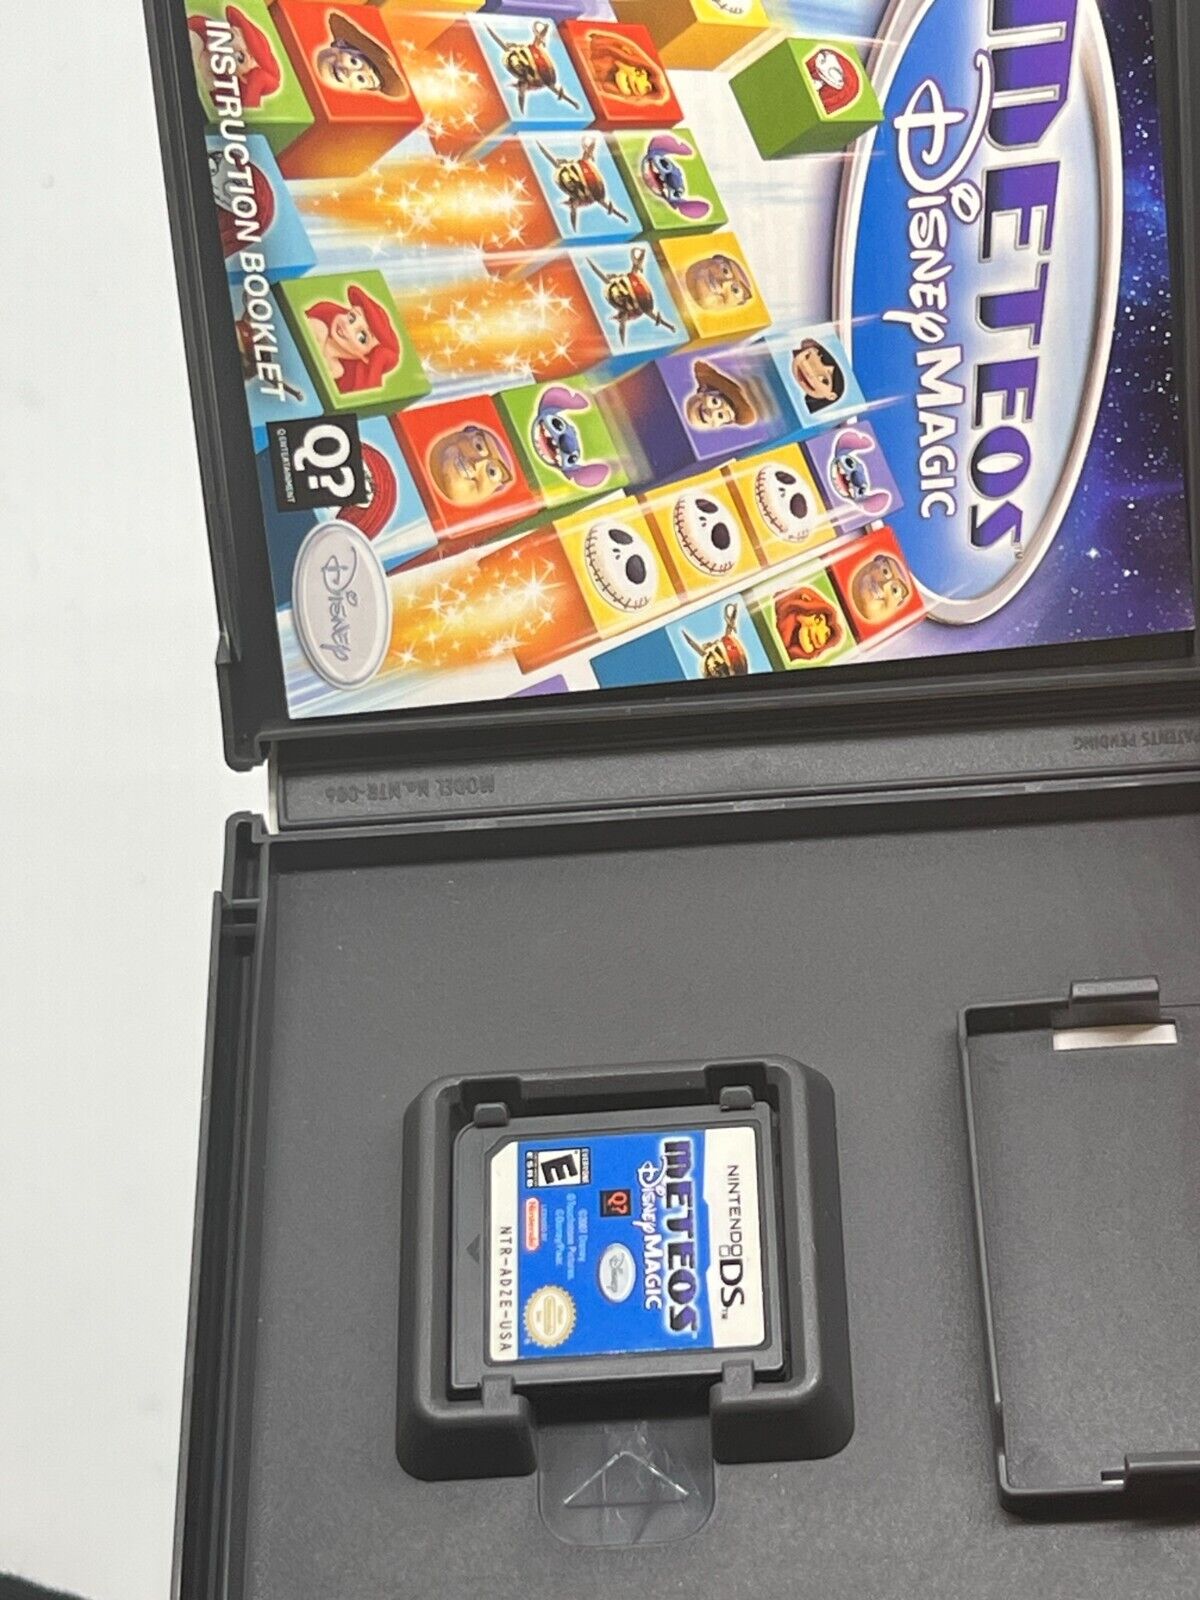 Meteos: Disney Magic (Nintendo DS, 2007) - Tested